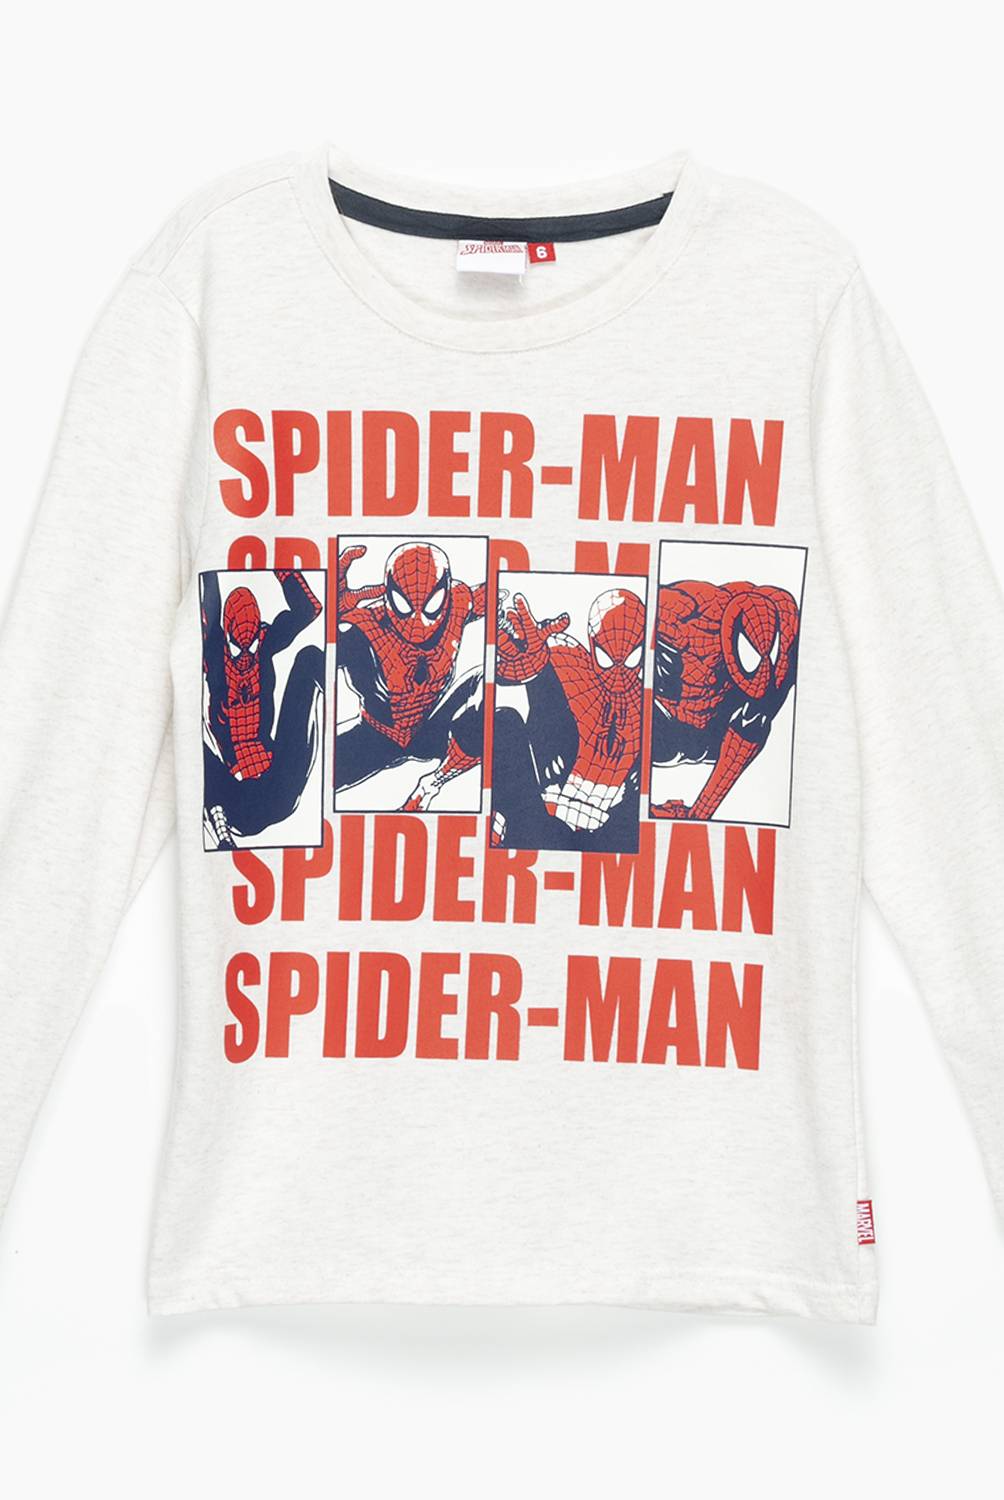 SPIDER-MAN - Polera Print Spiderman Algodón Niño